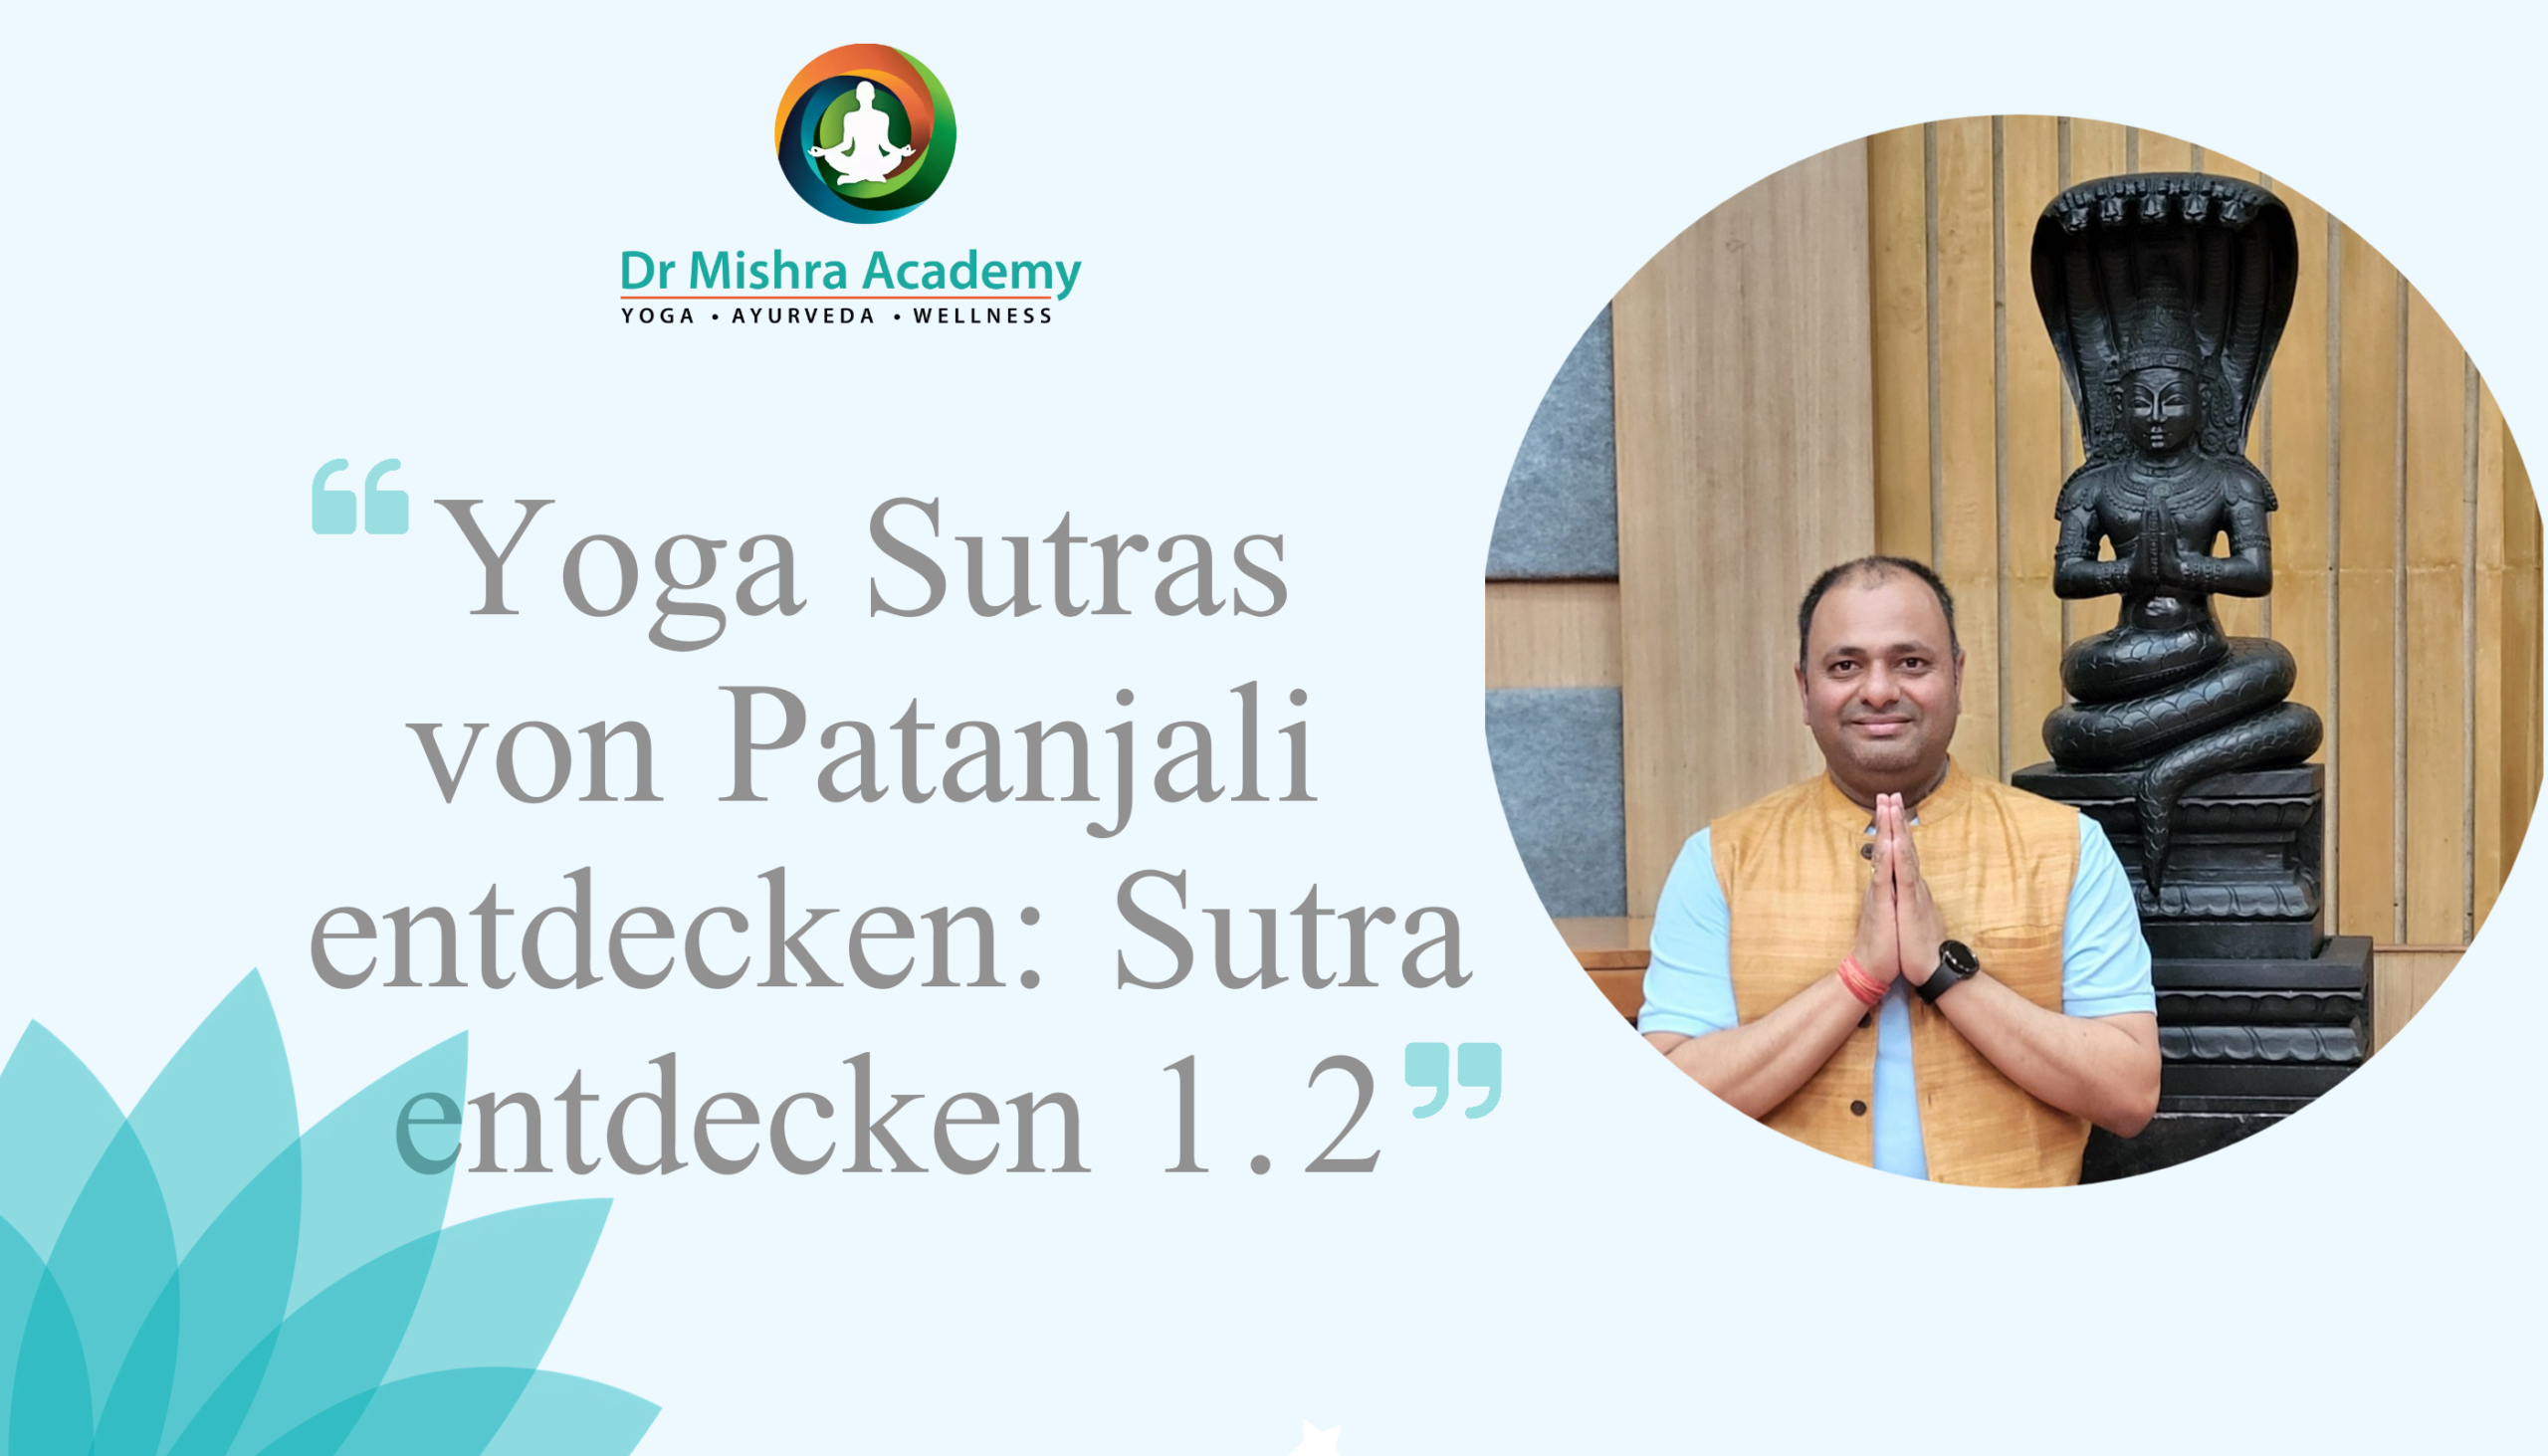 Patanjali's Yoga Sutras: Sutraforschung 1.2